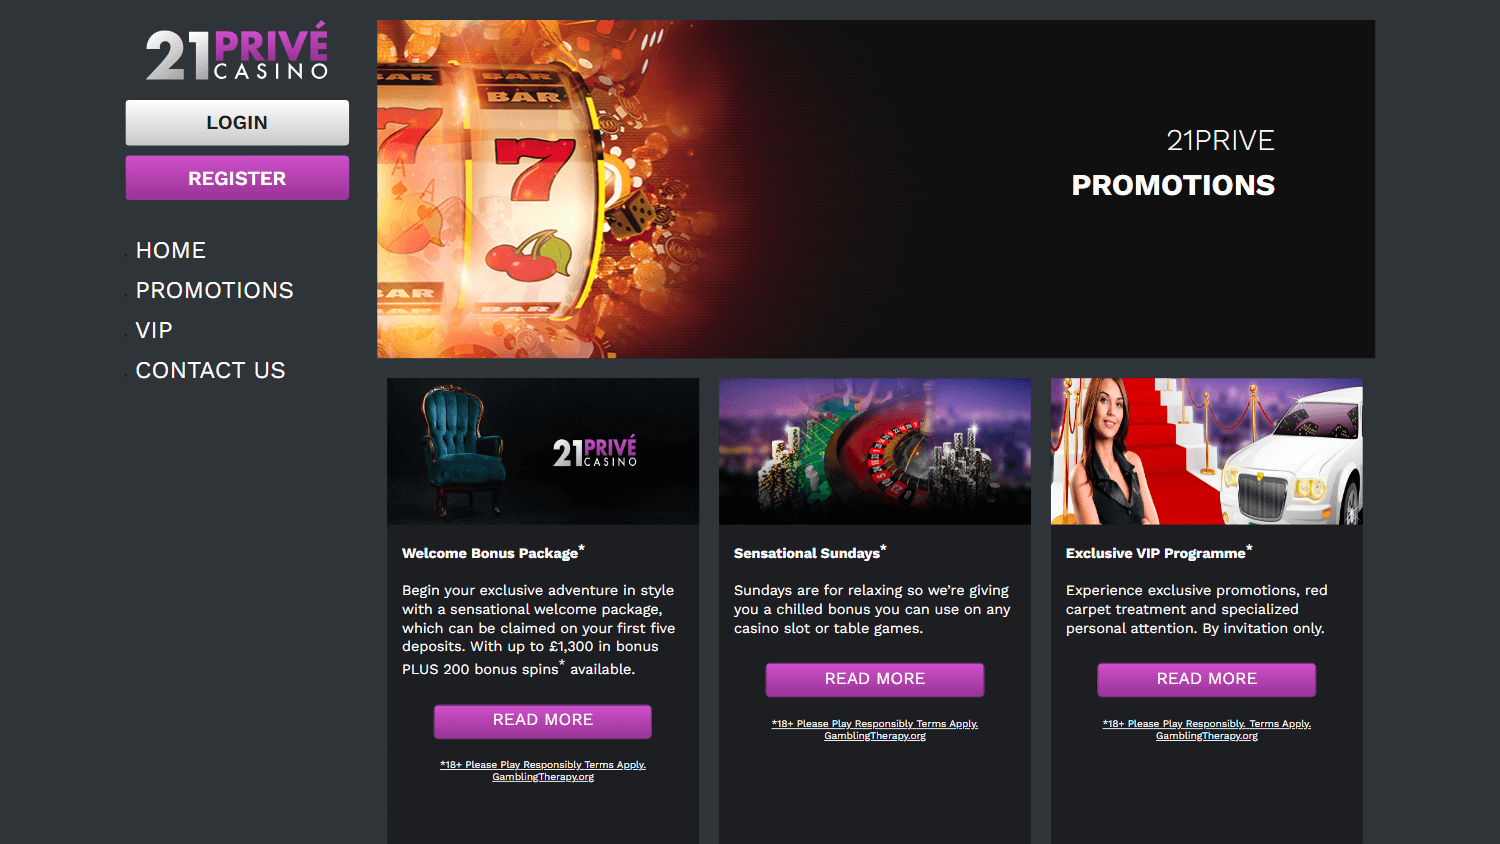 21_prive_casino_promotions_desktop